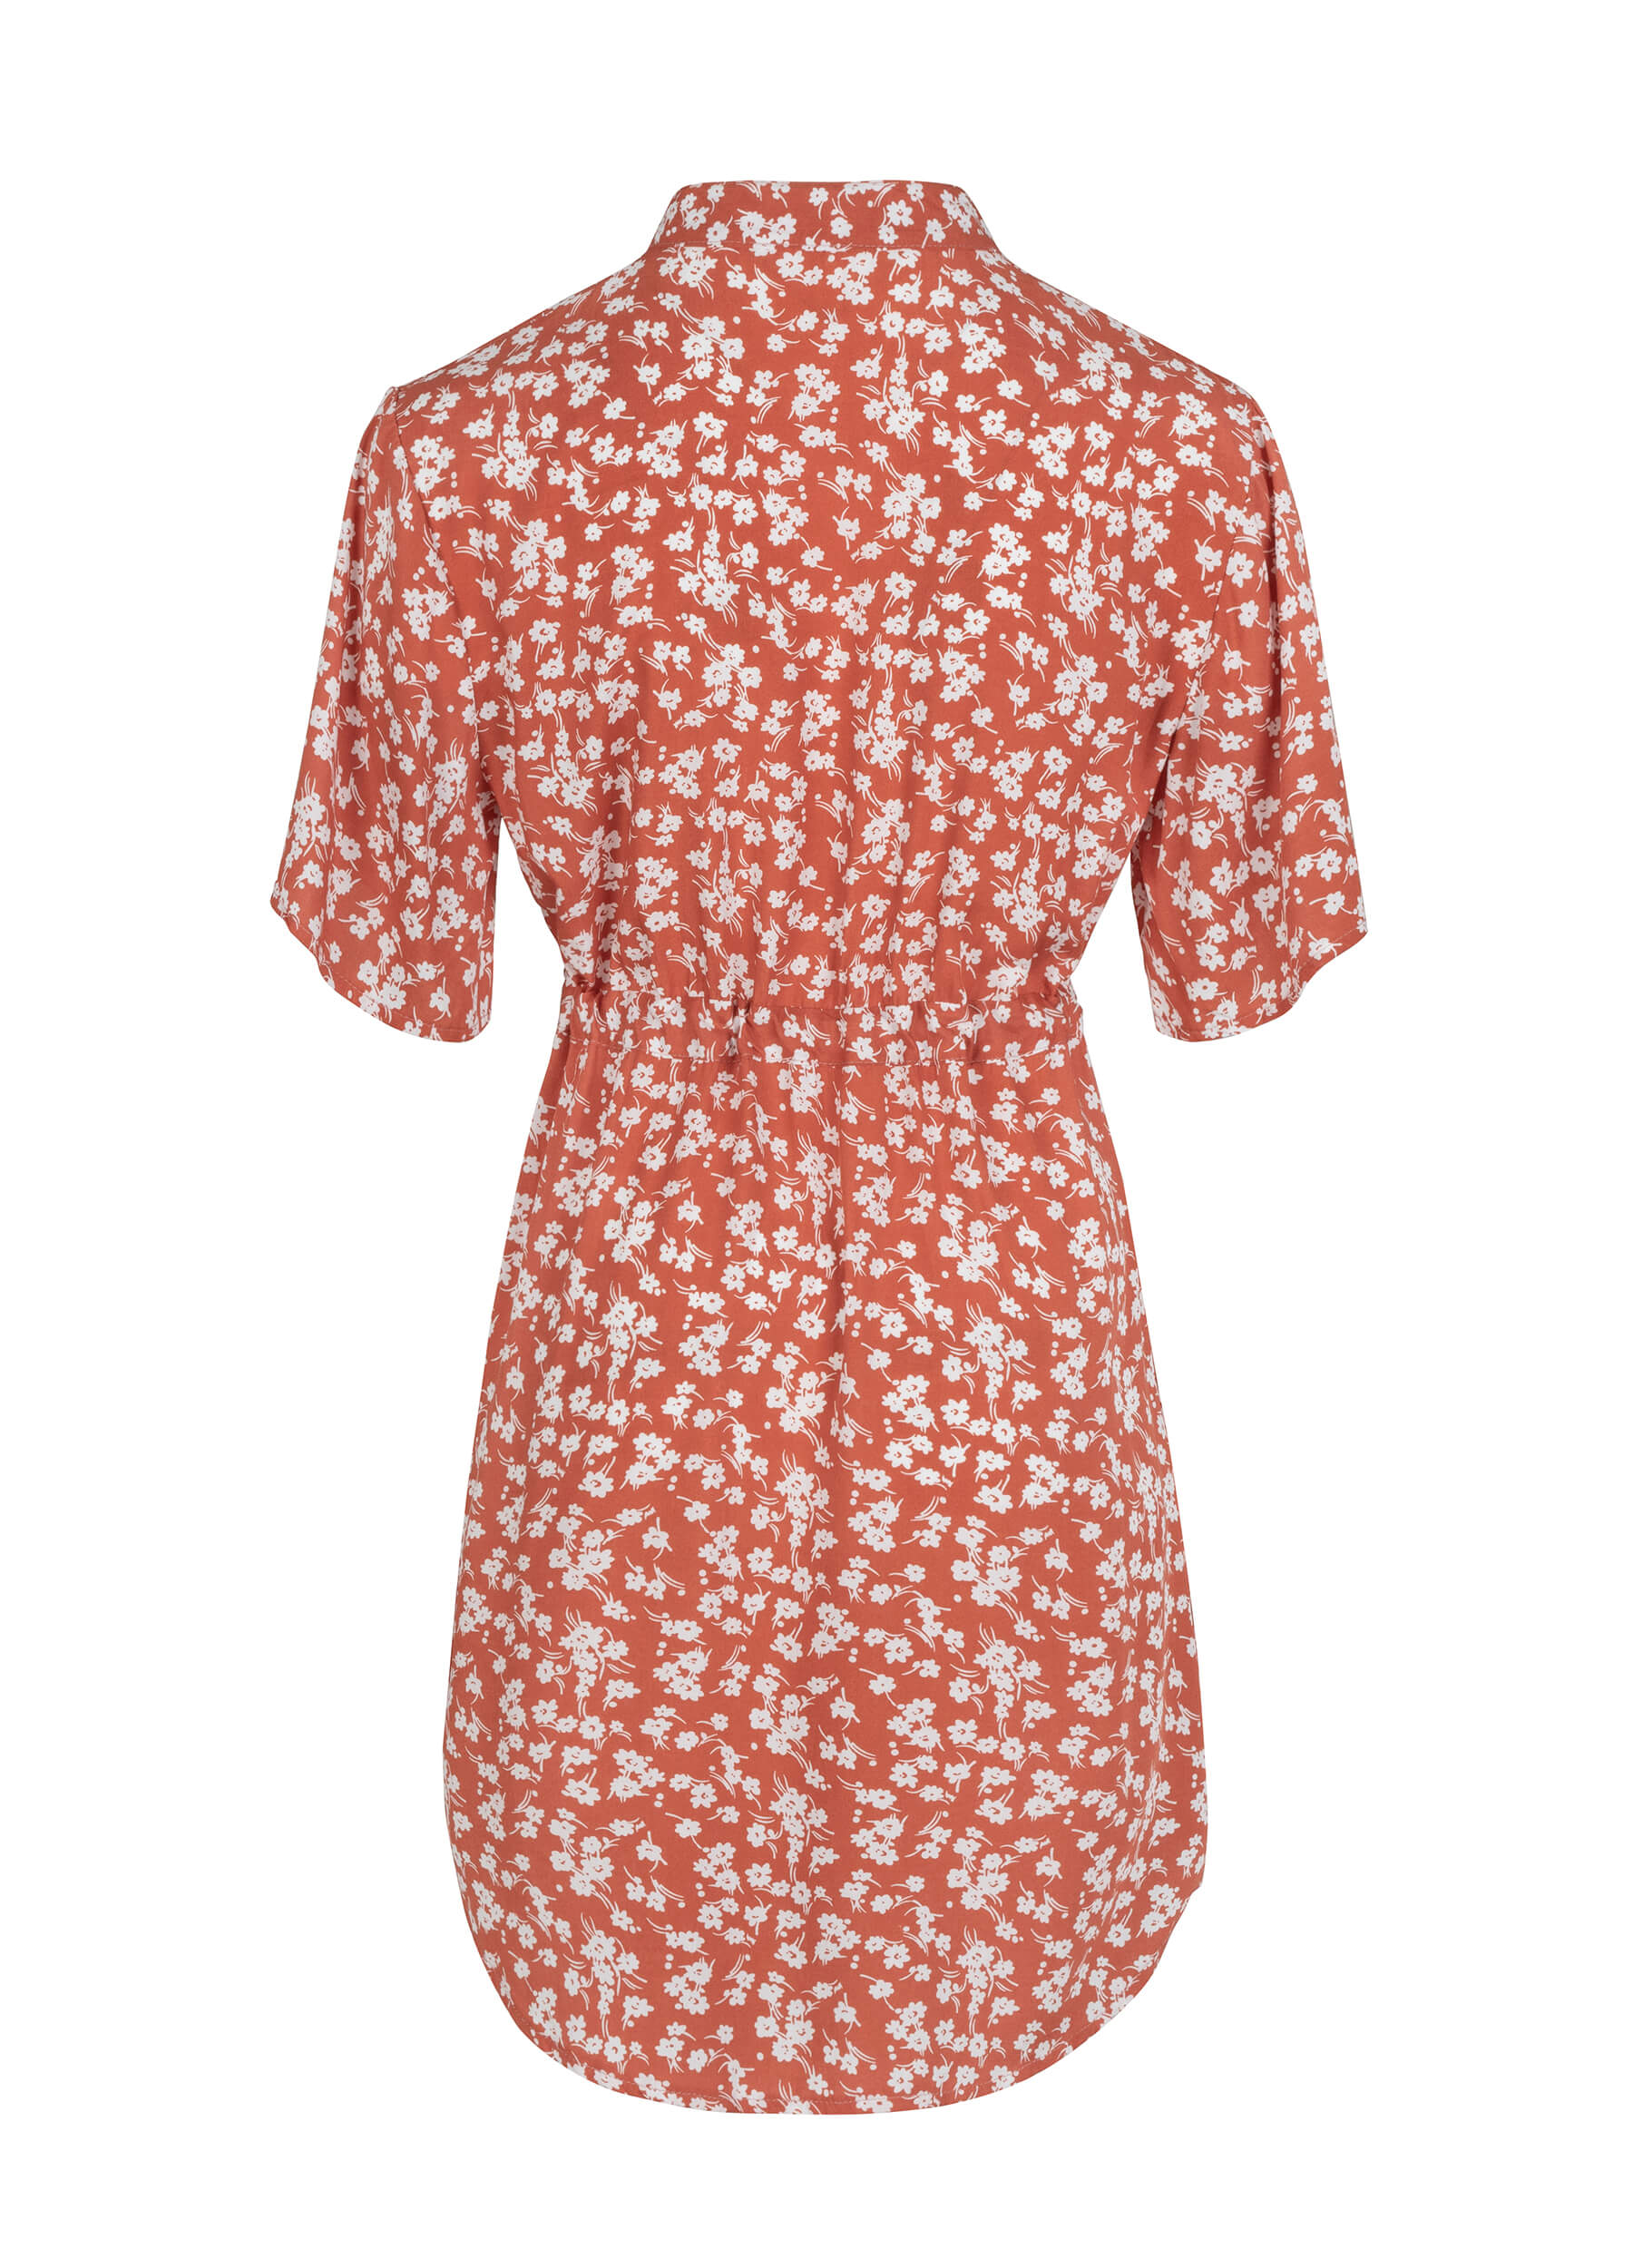 MECALA Women's Summer Floral Print V-Neck Short Sleeve Short Dress-Red